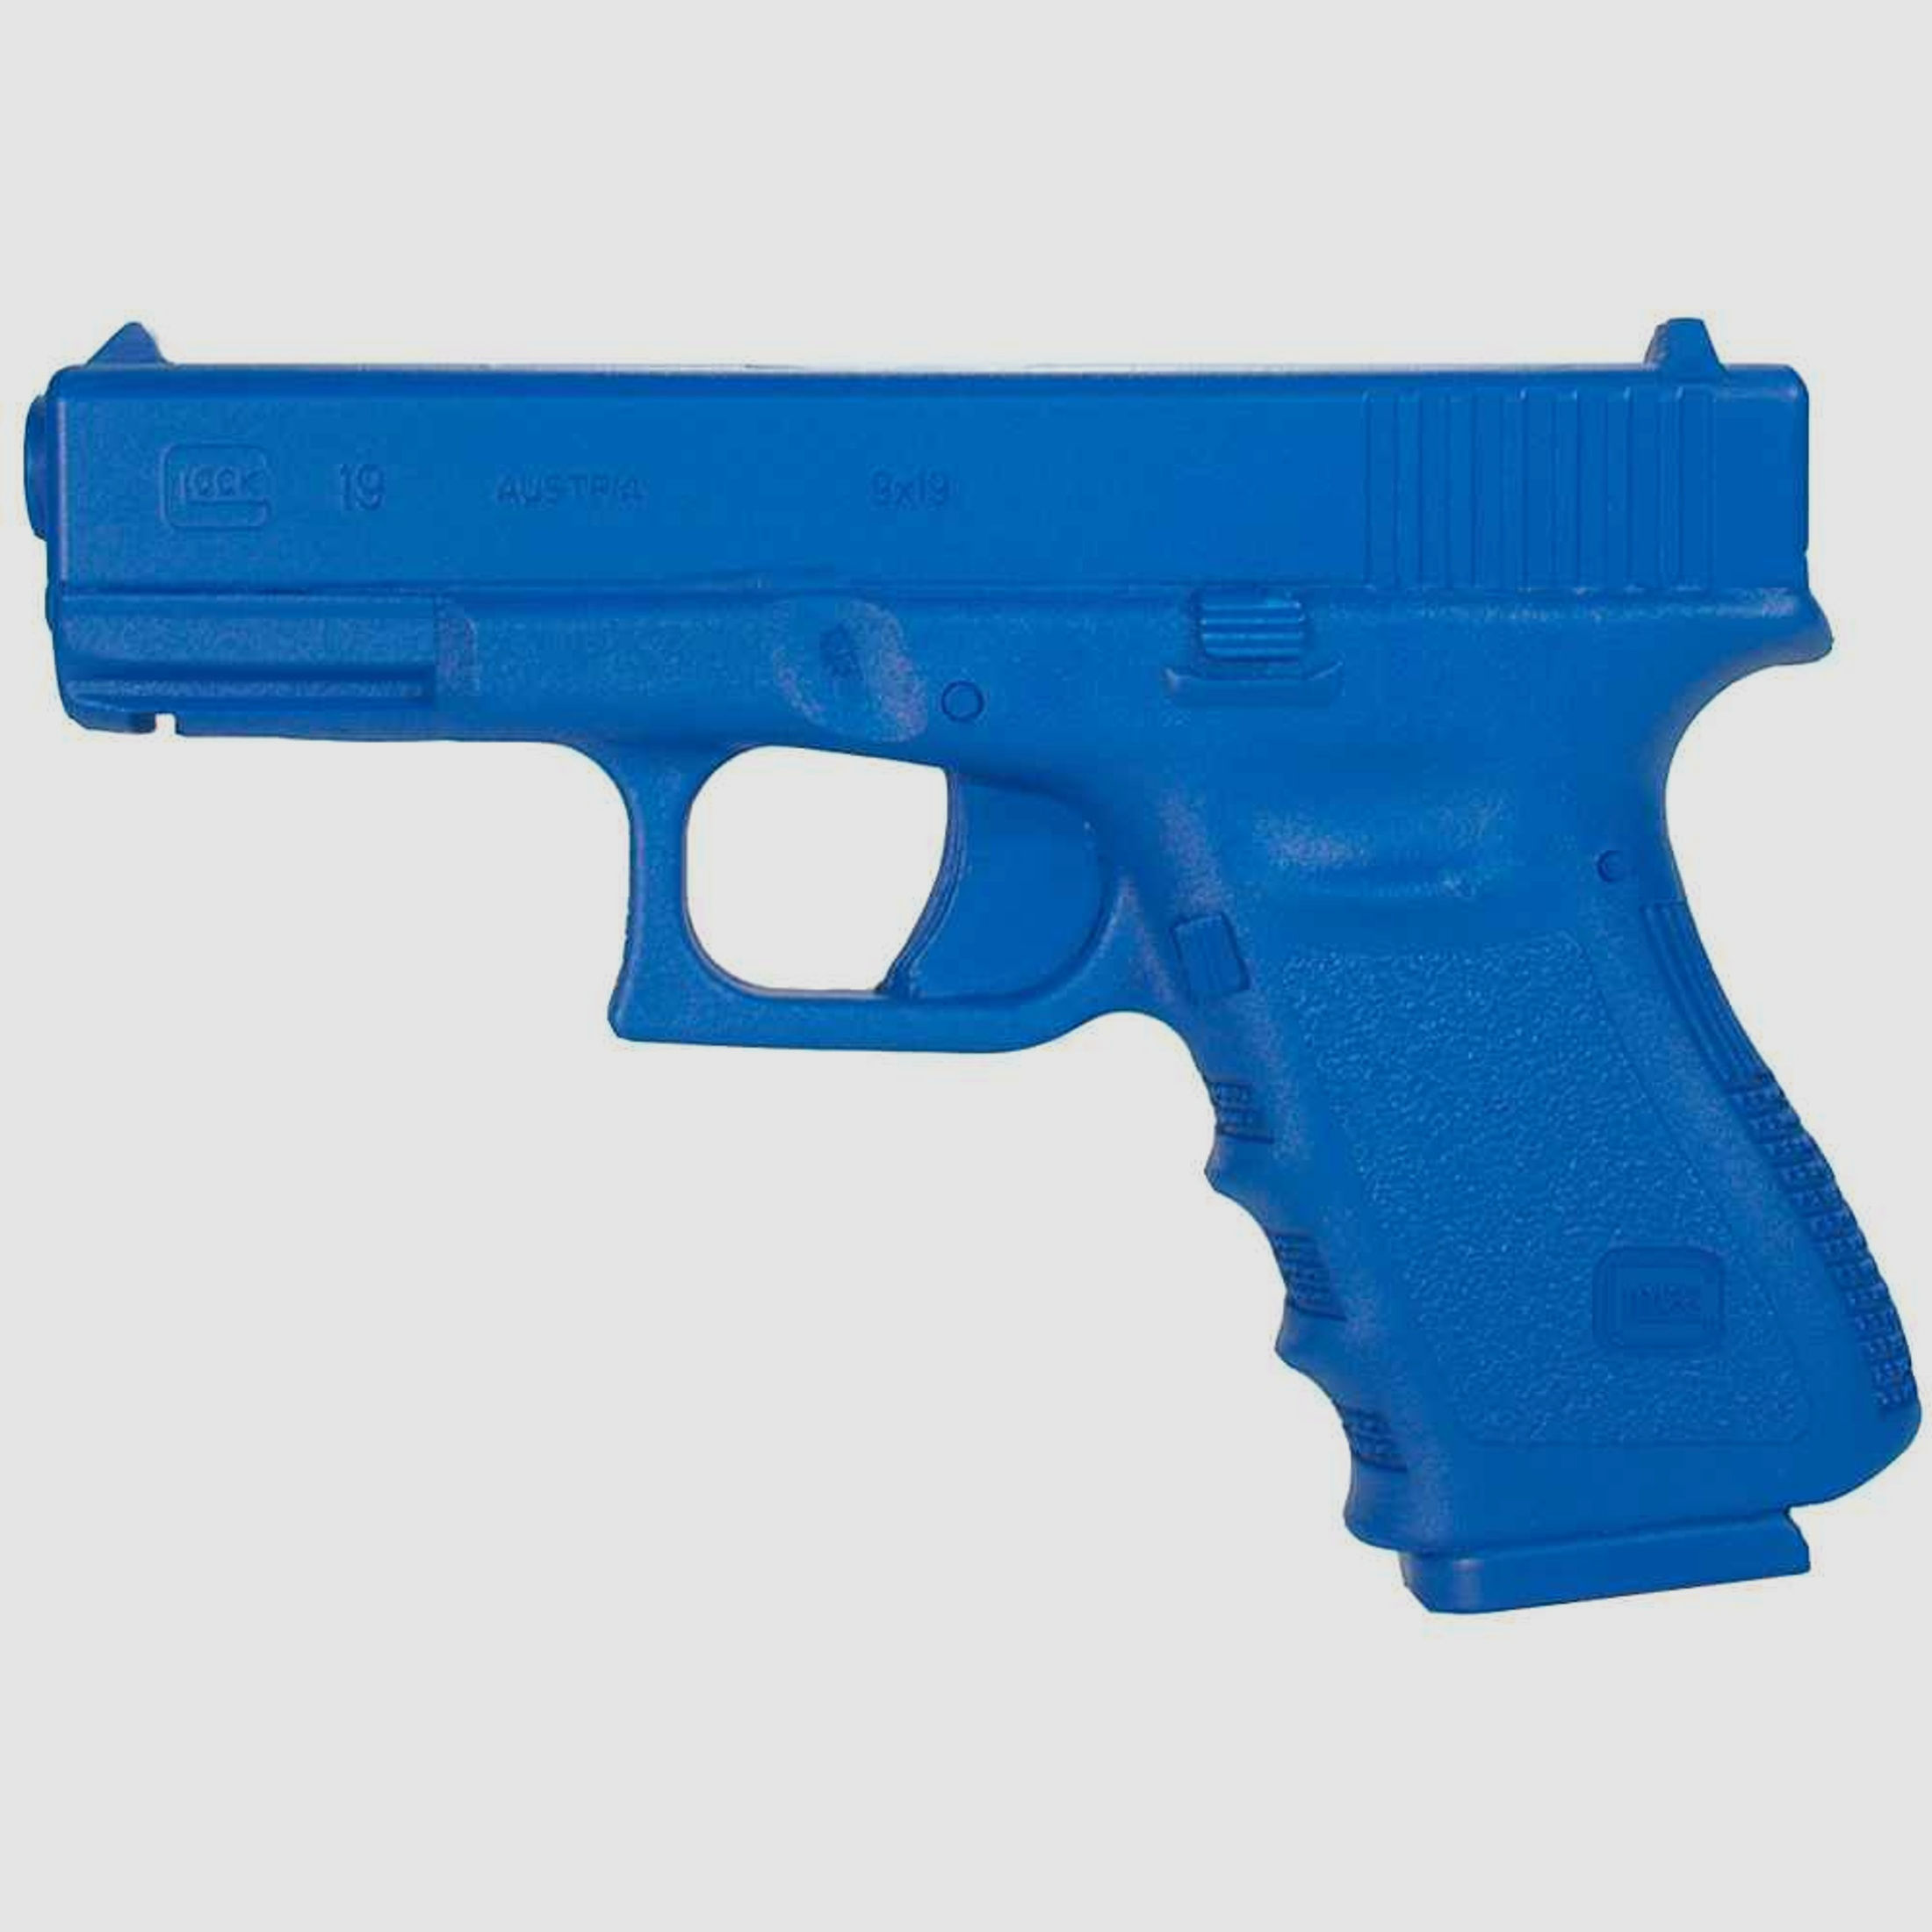 Glock 19 Bluegun